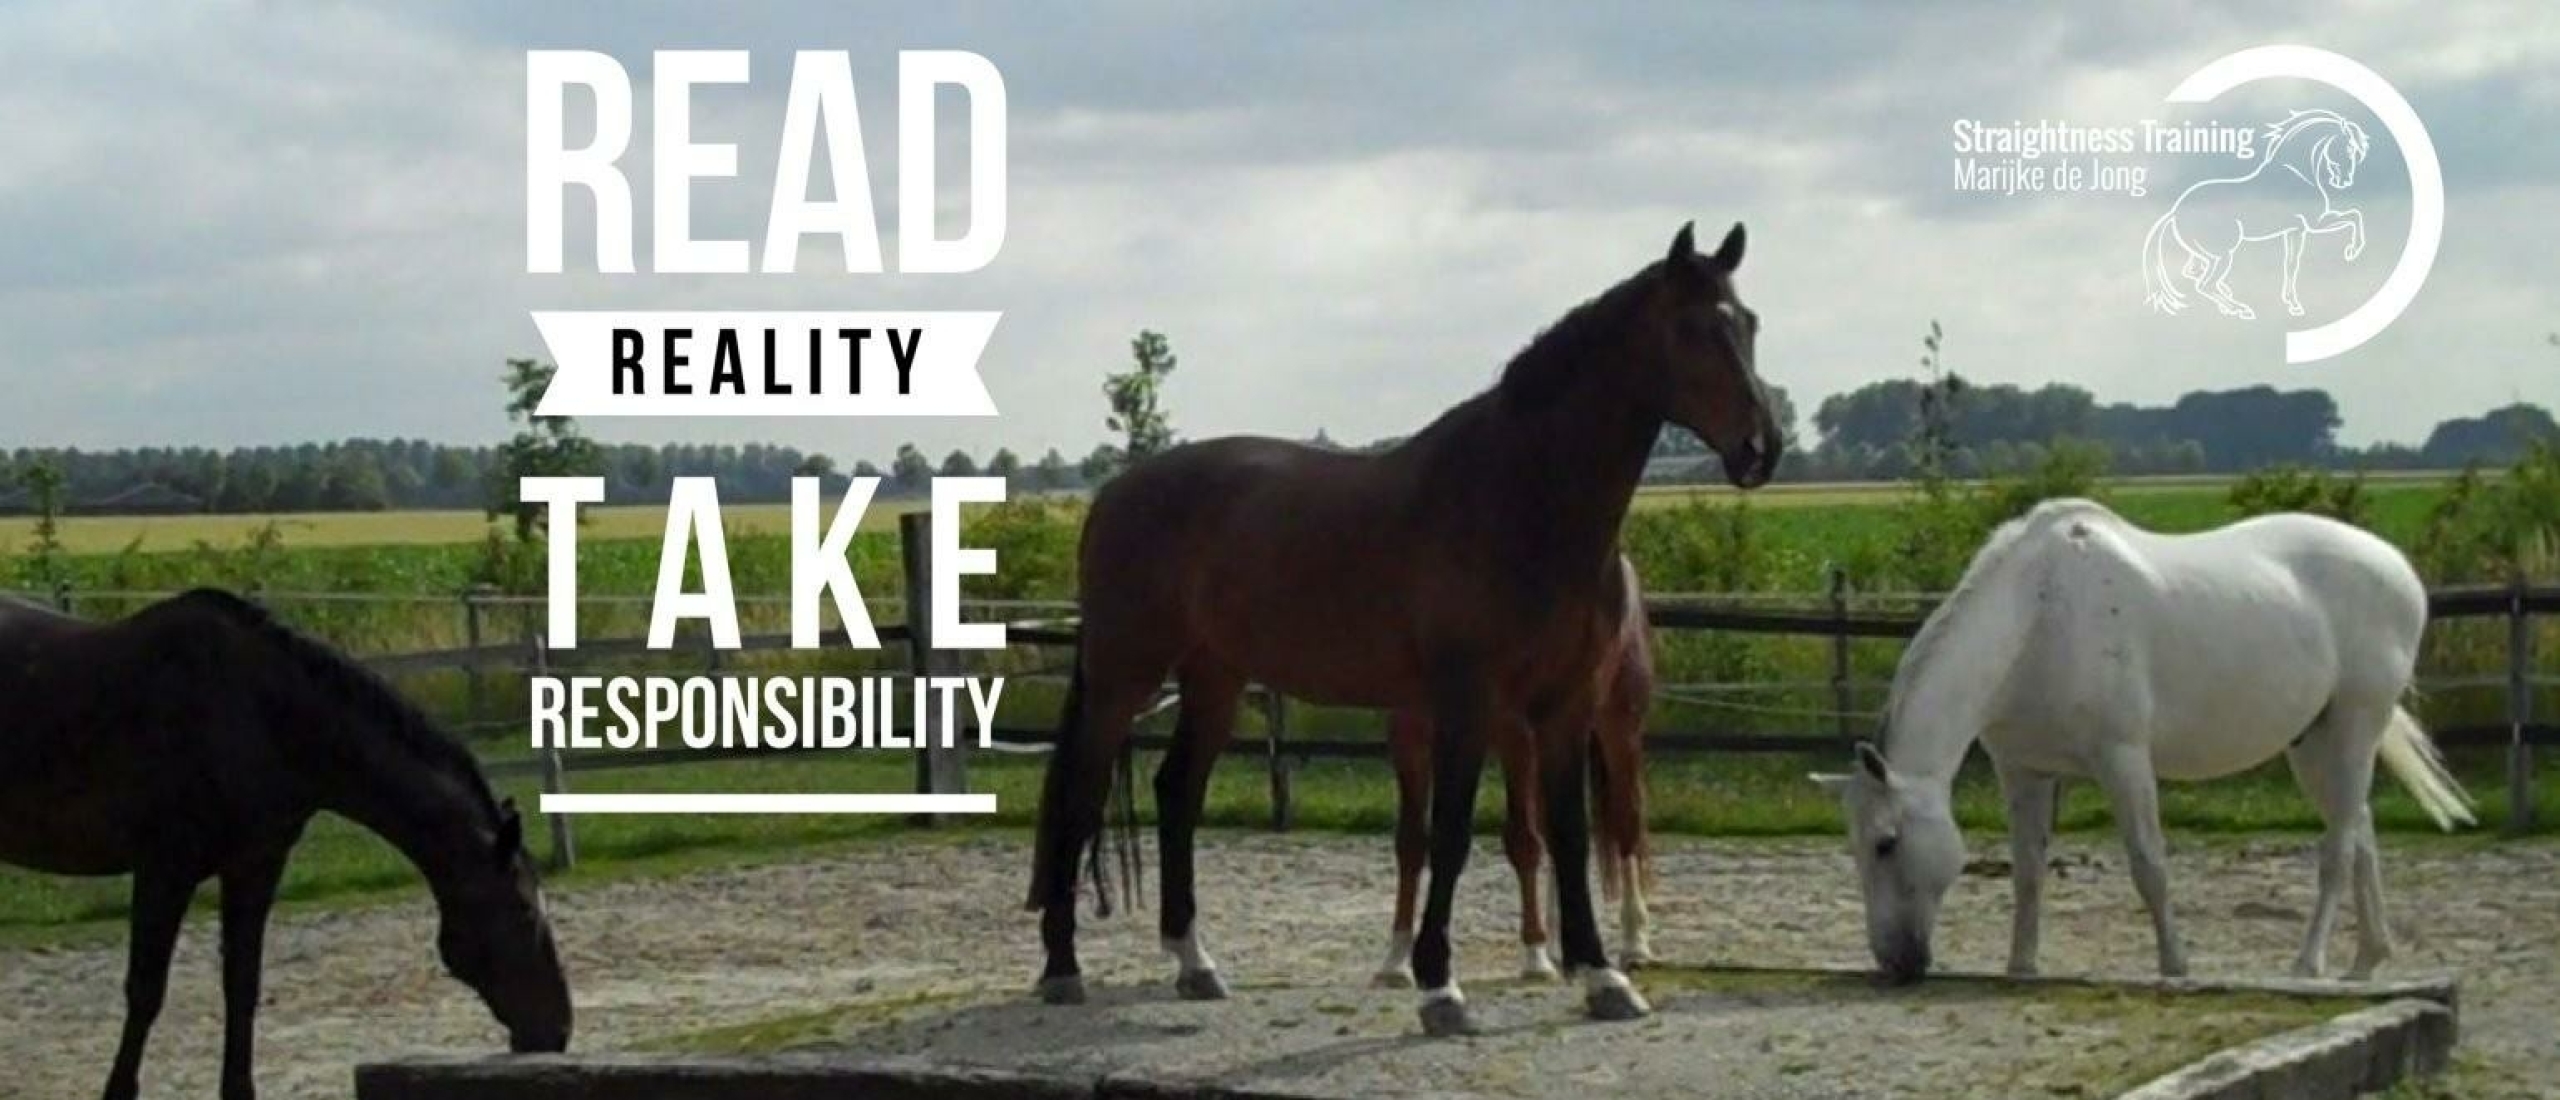 Read Reality - Take Responsibility